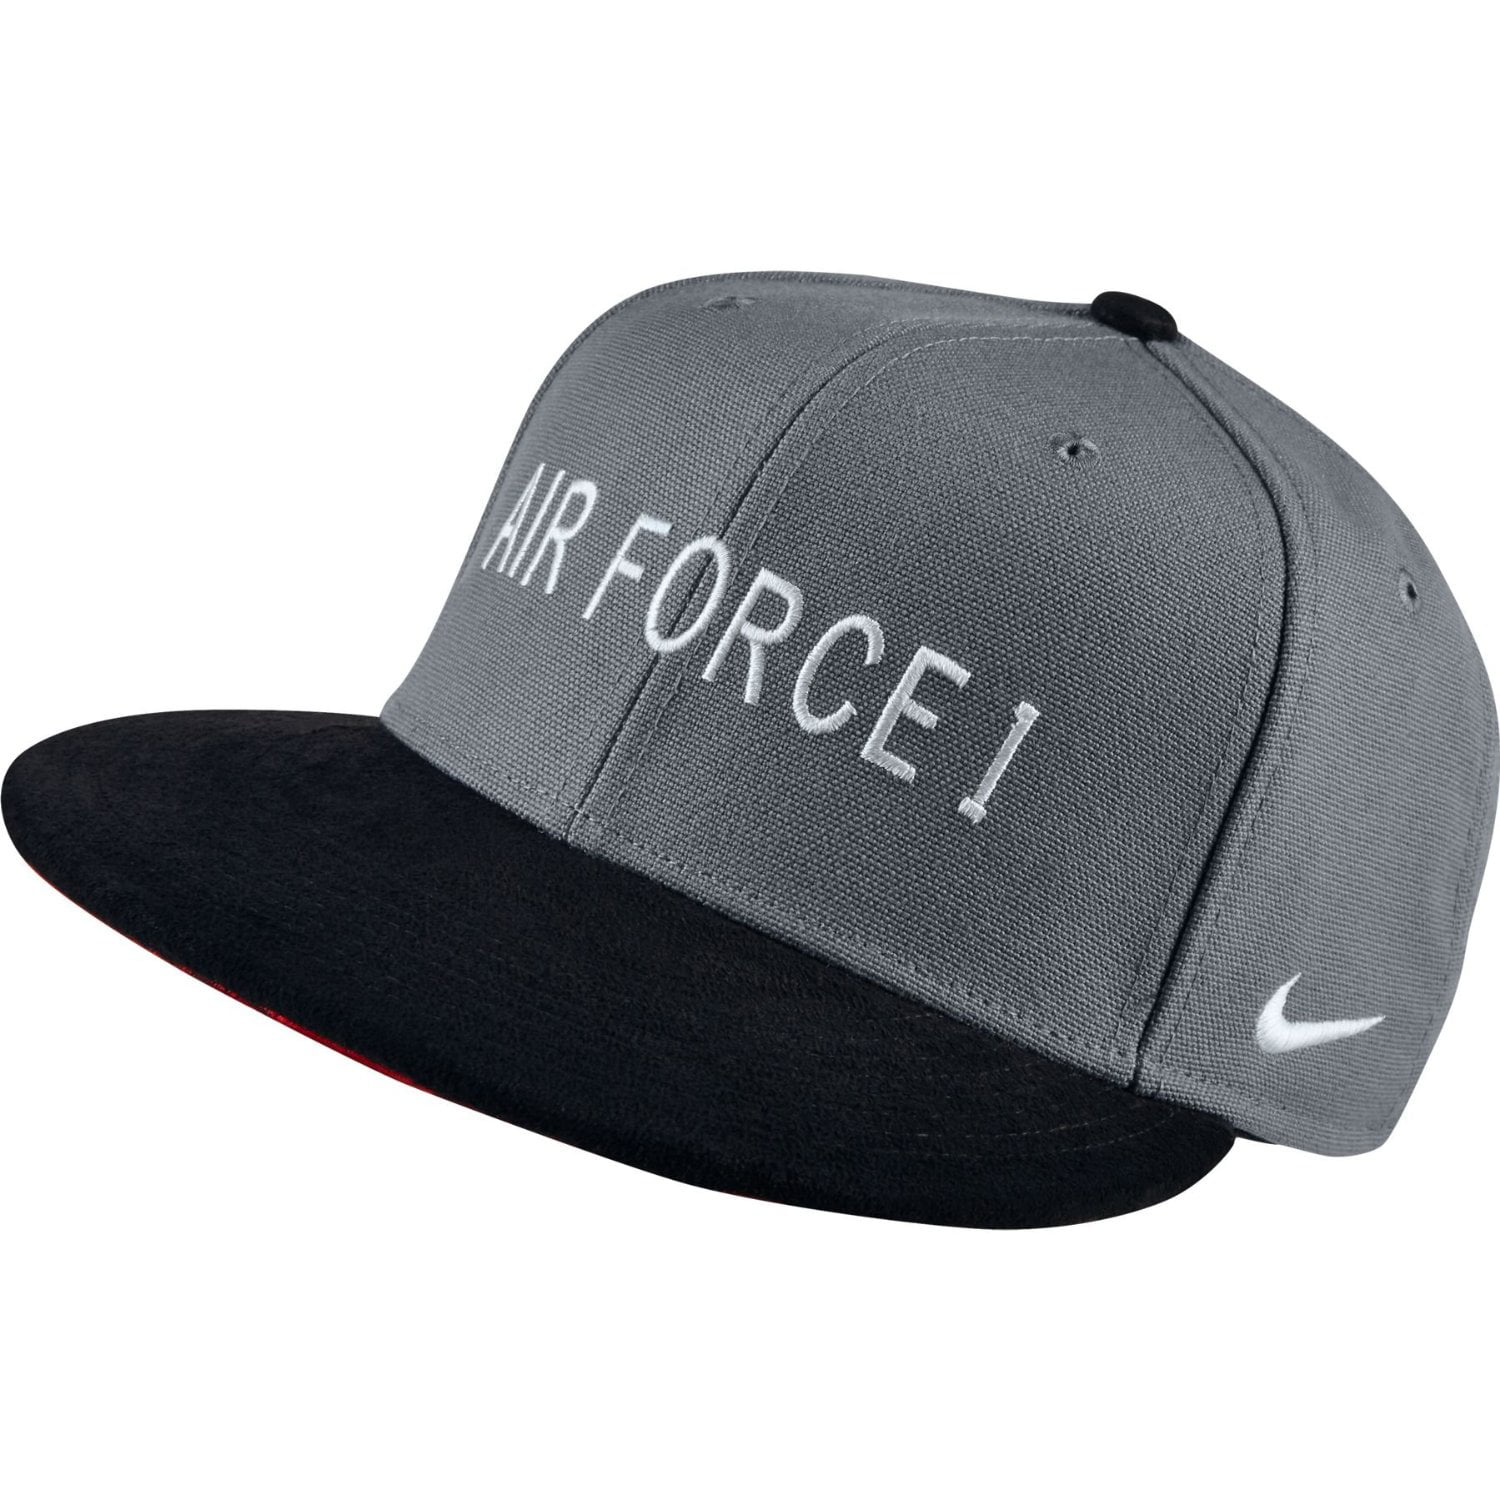 nike air force 1 hat